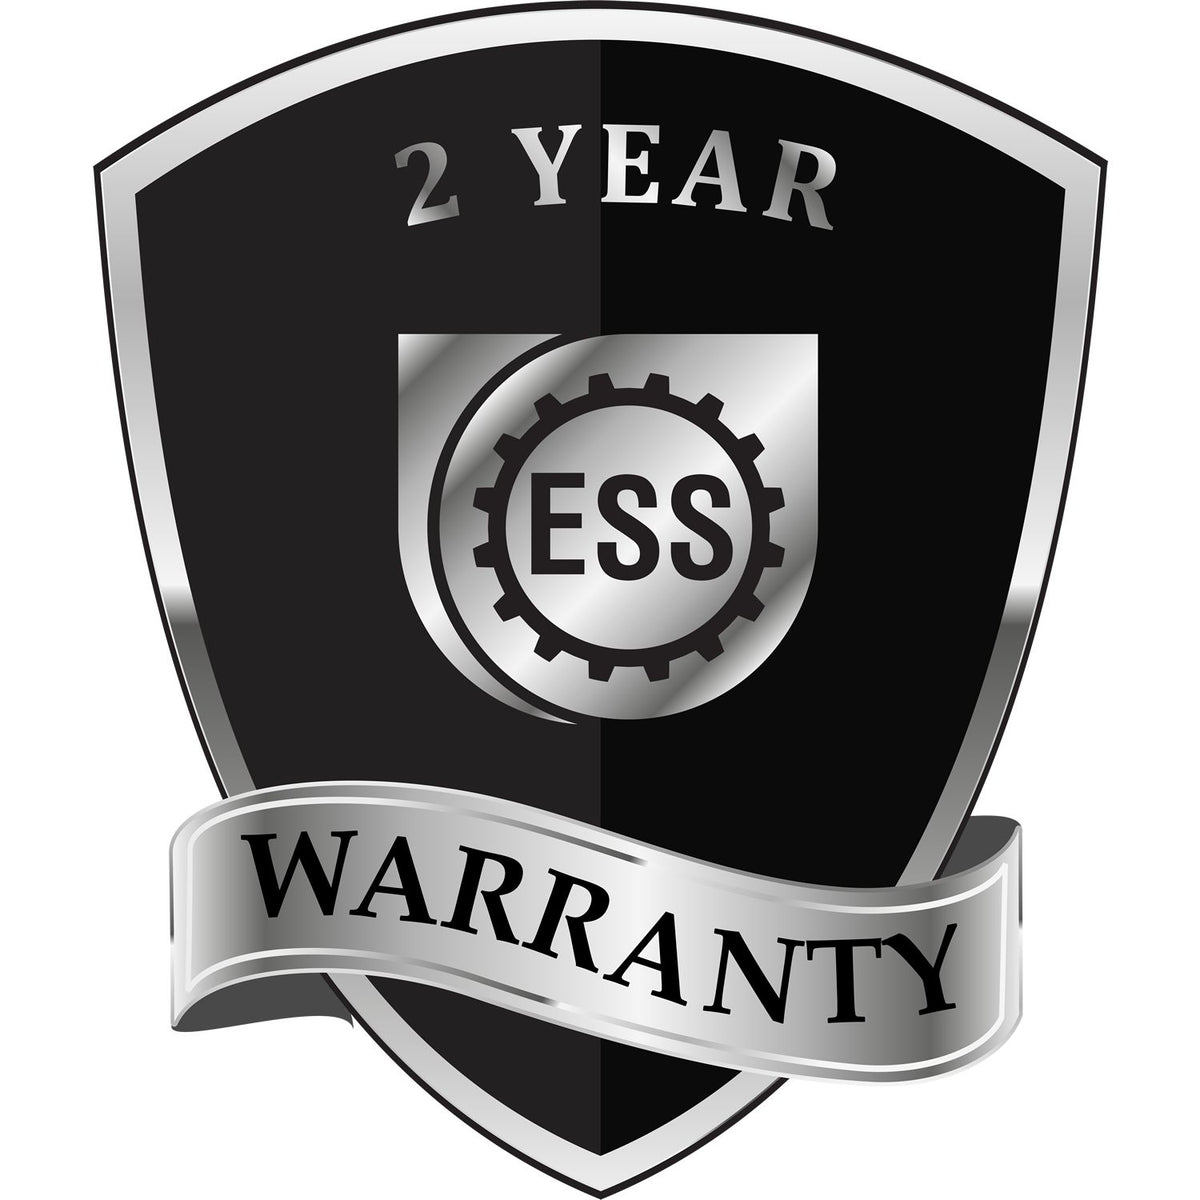 A black and silver badge or emblem showing warranty information for the Hybrid Massachusetts Land Surveyor Seal